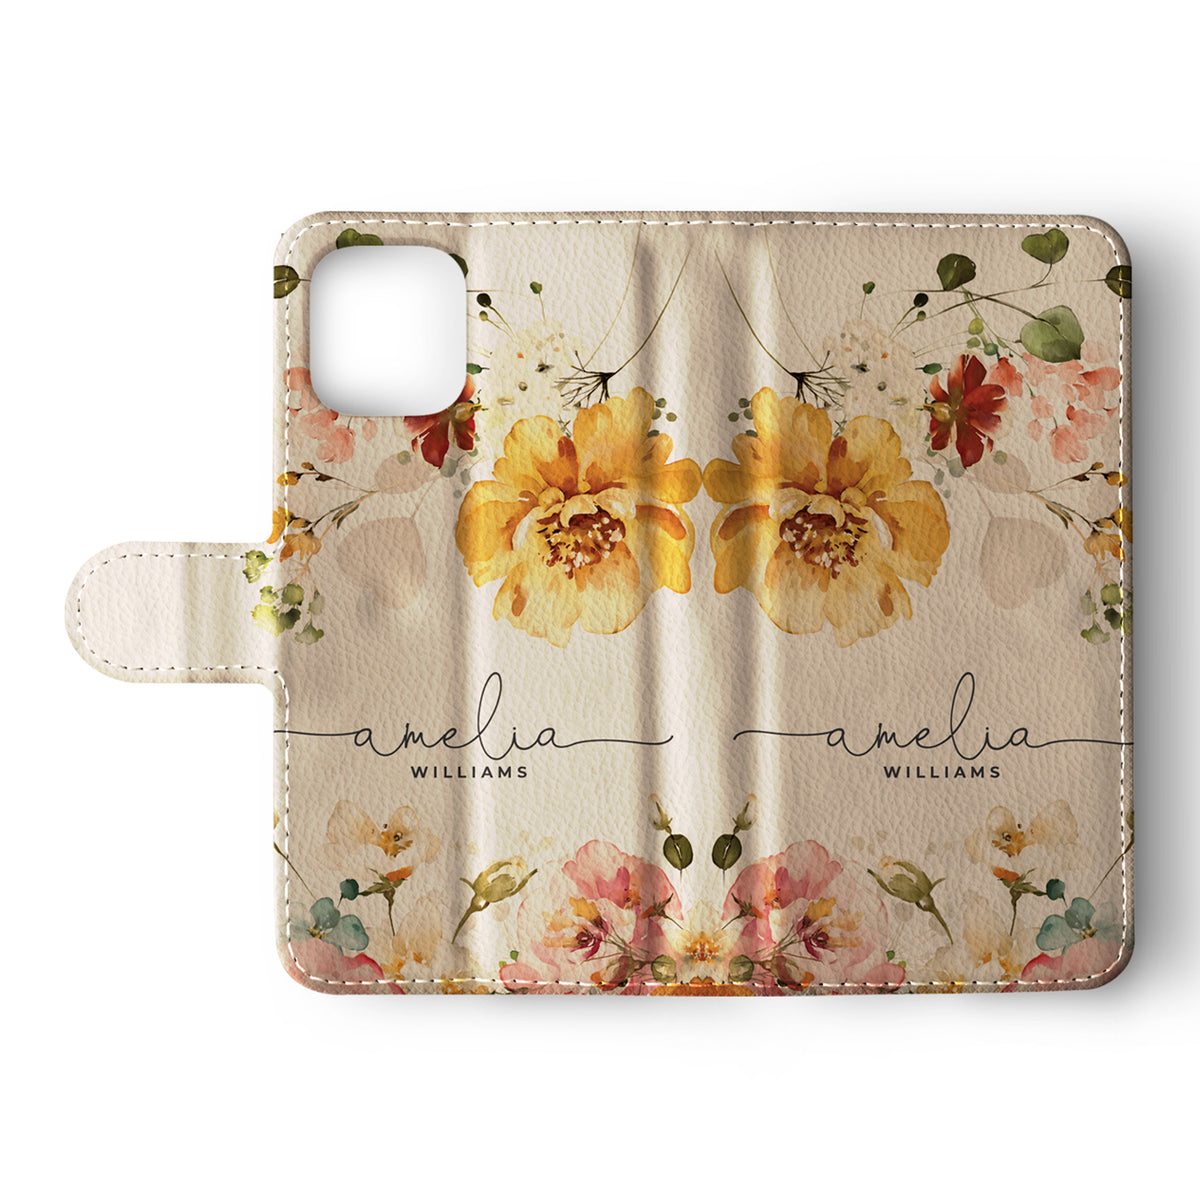 Personalised Wallet Flip Phone Case Custom Name Floral Watercolour Romantic Roses